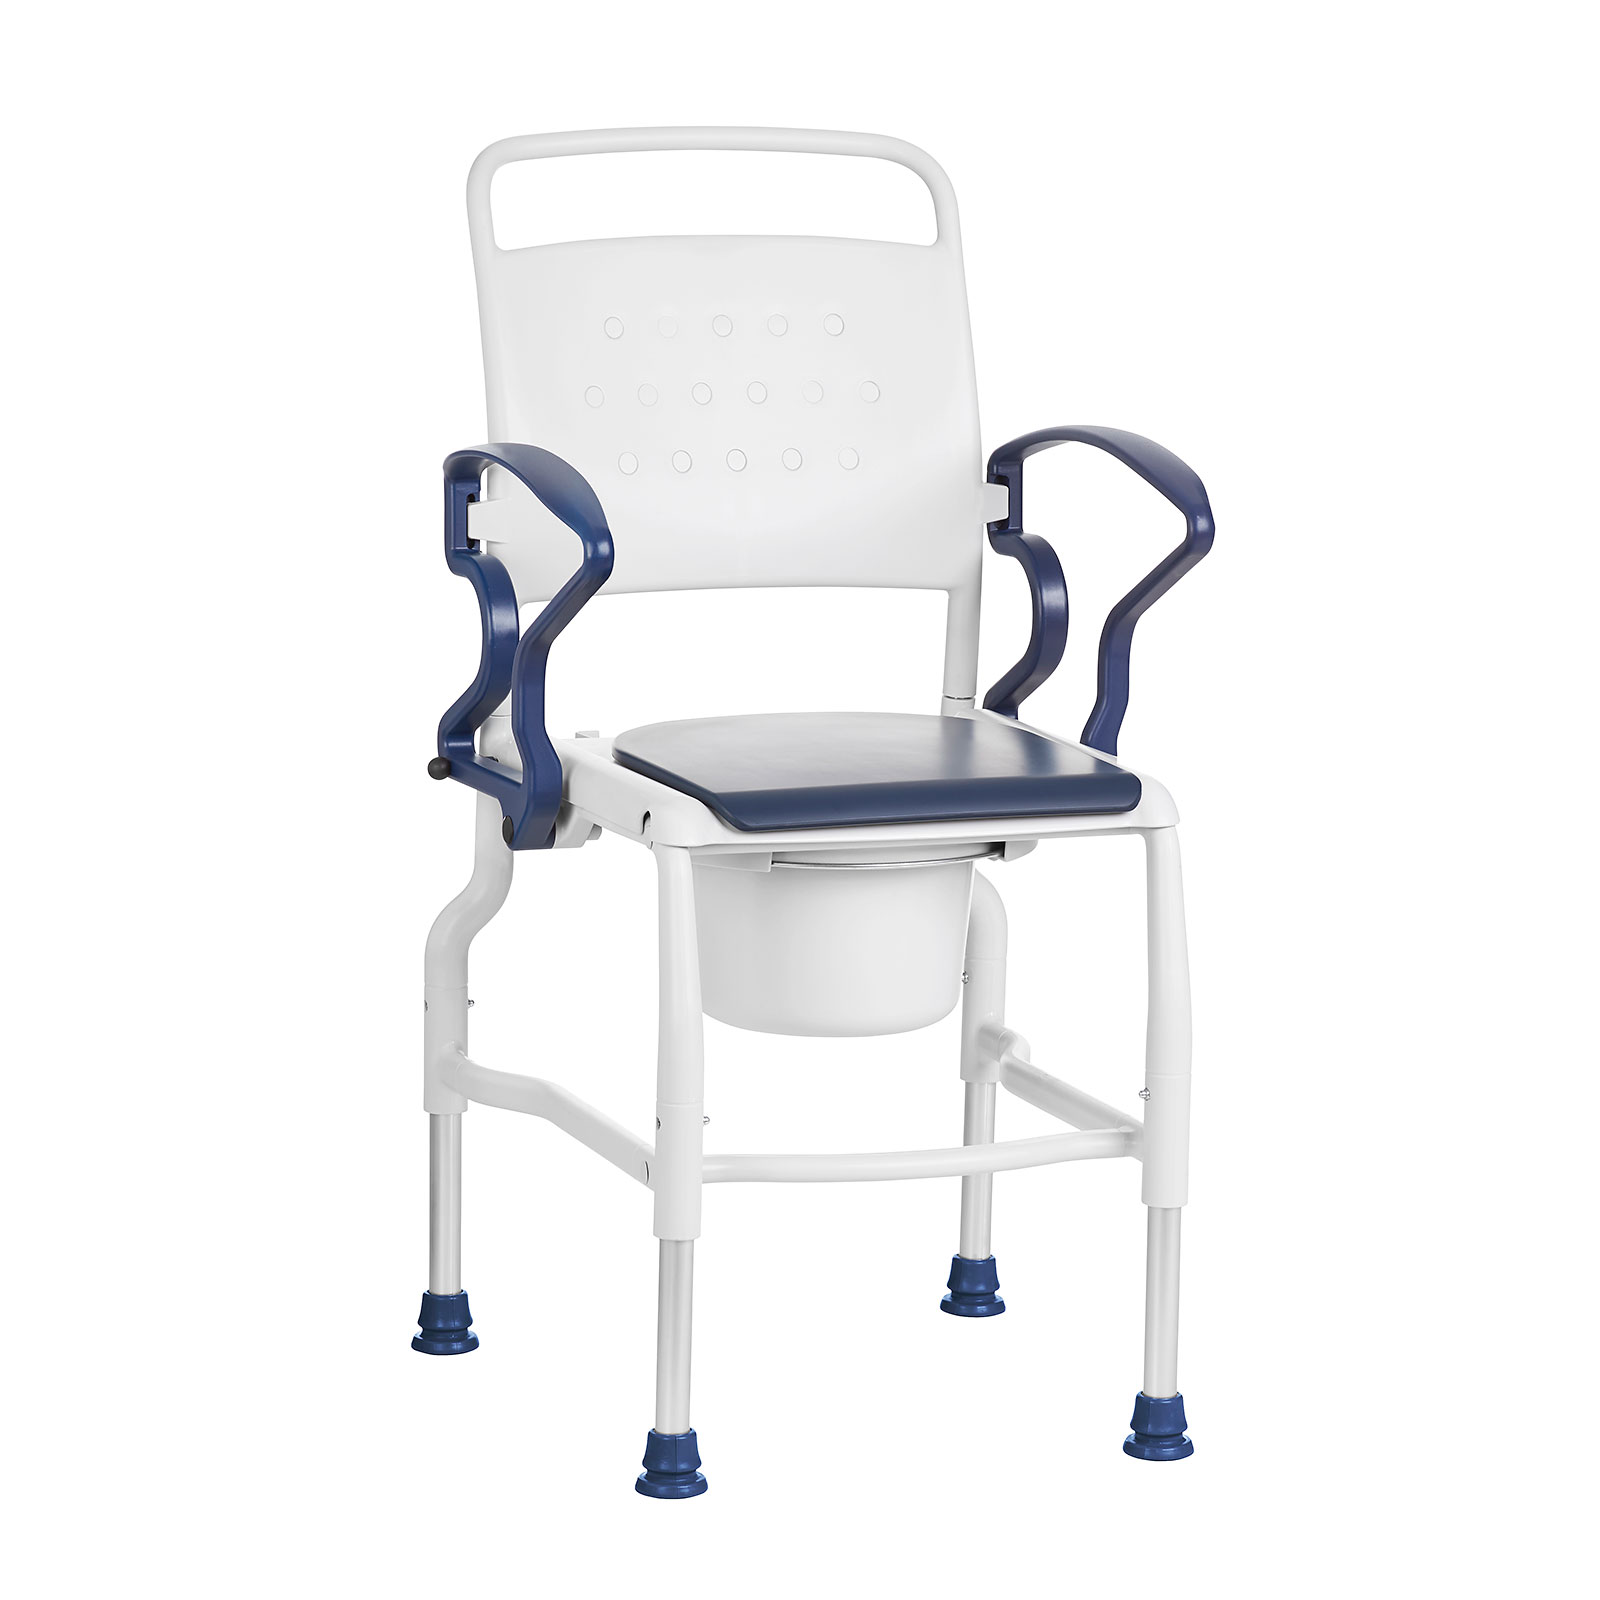 Koln-Bedside Commode Chair